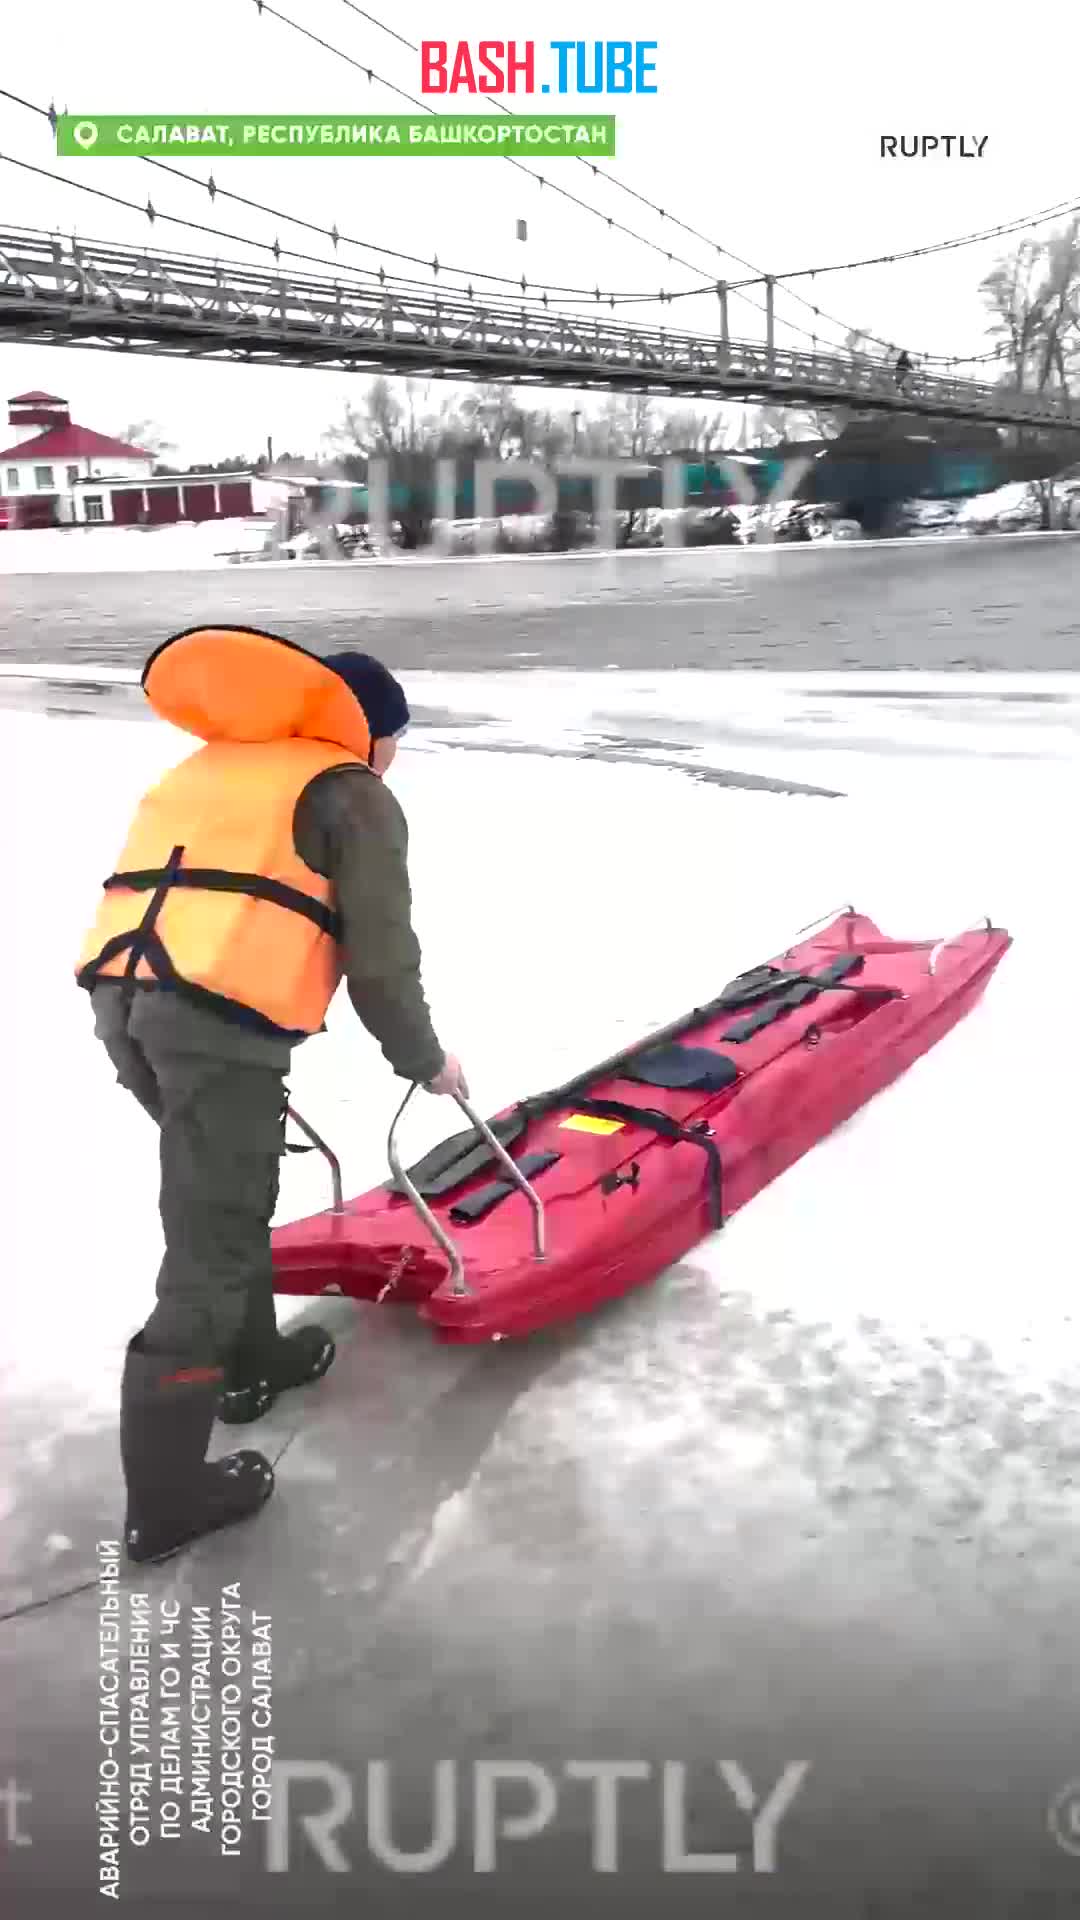  В Башкирии спасатели вытащили на берег провалившуюся под лед собаку